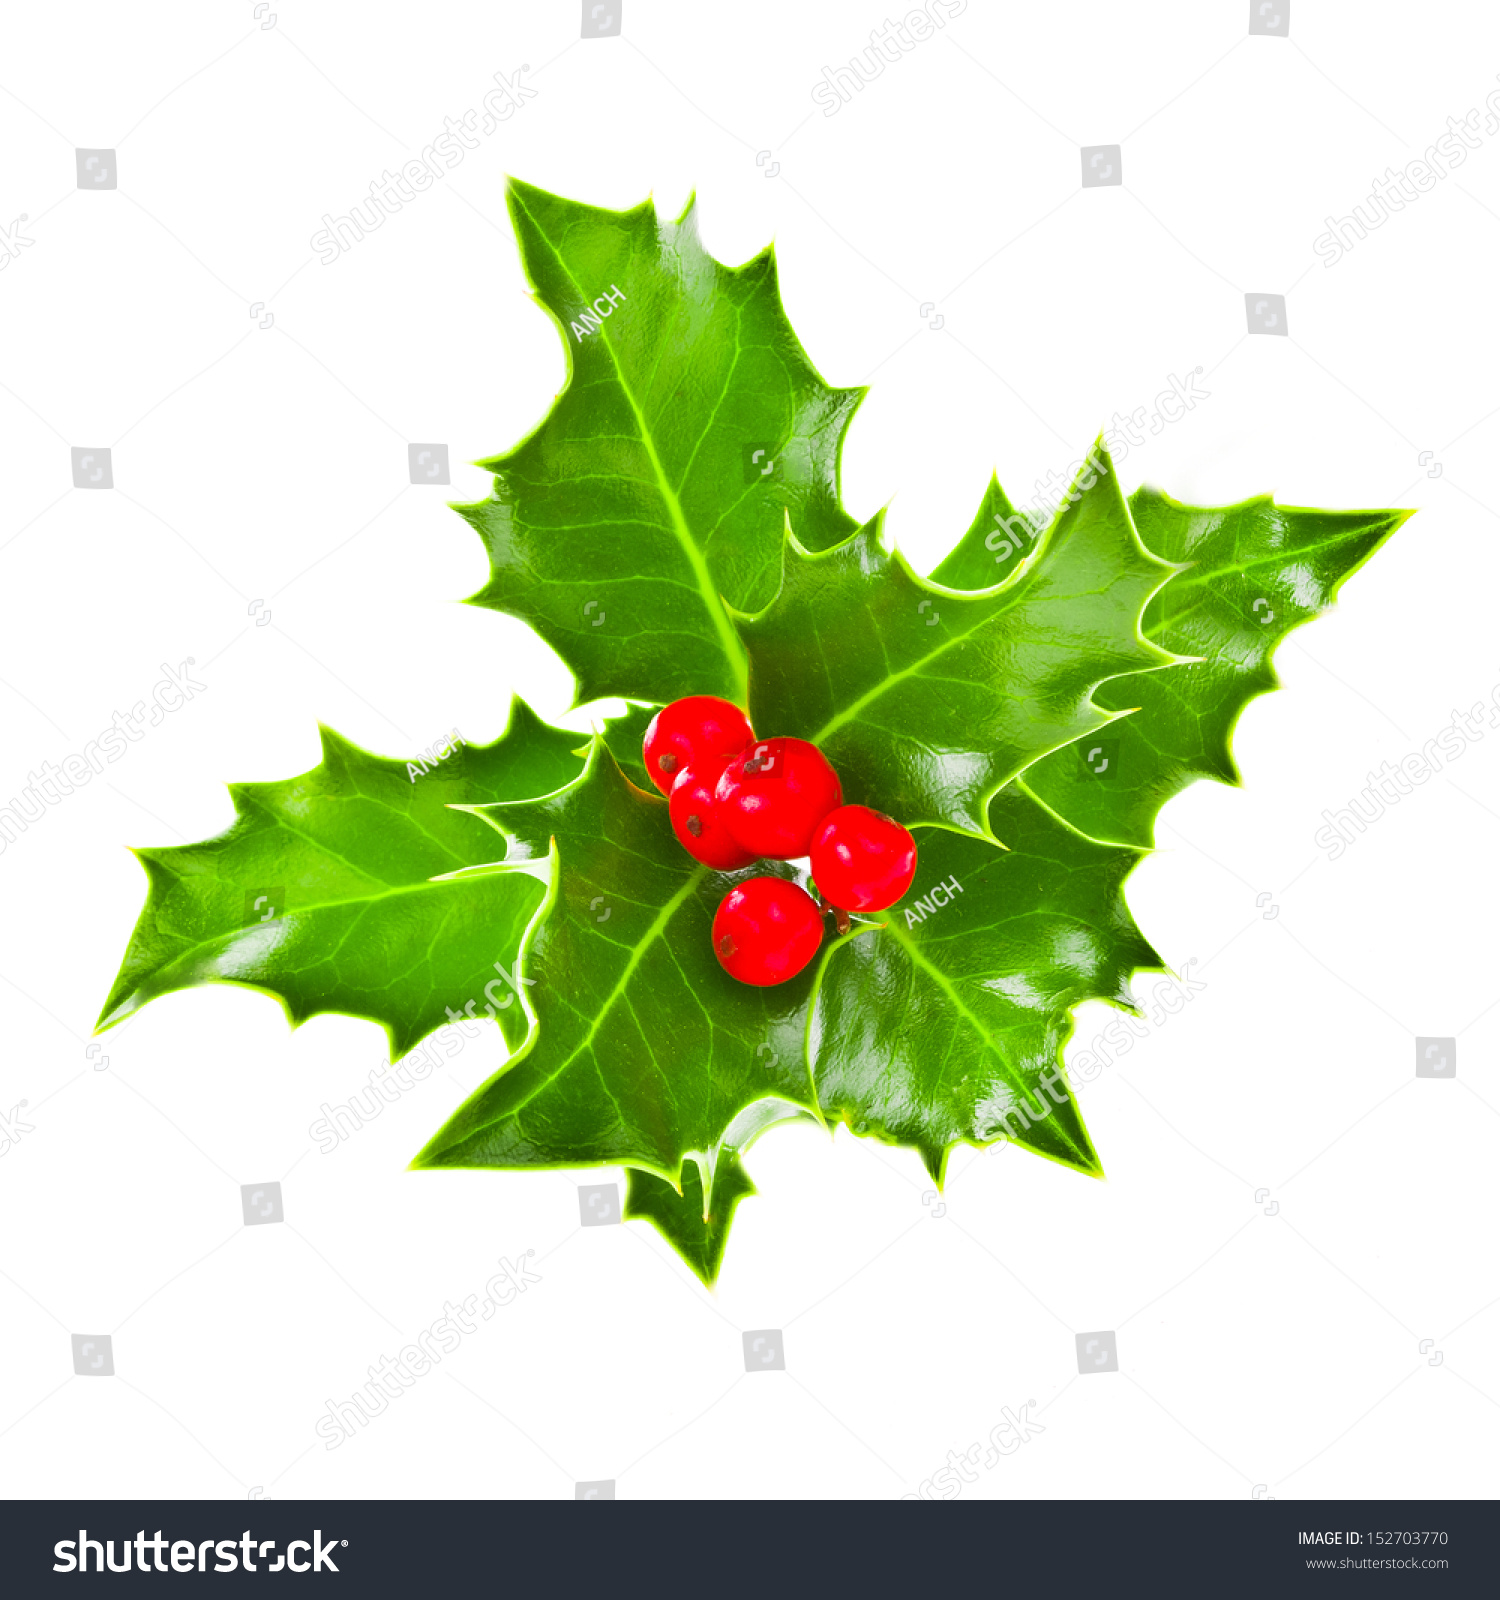 Christmas Motif Plant Aquifolium European Holly Stock Photo & Image ...